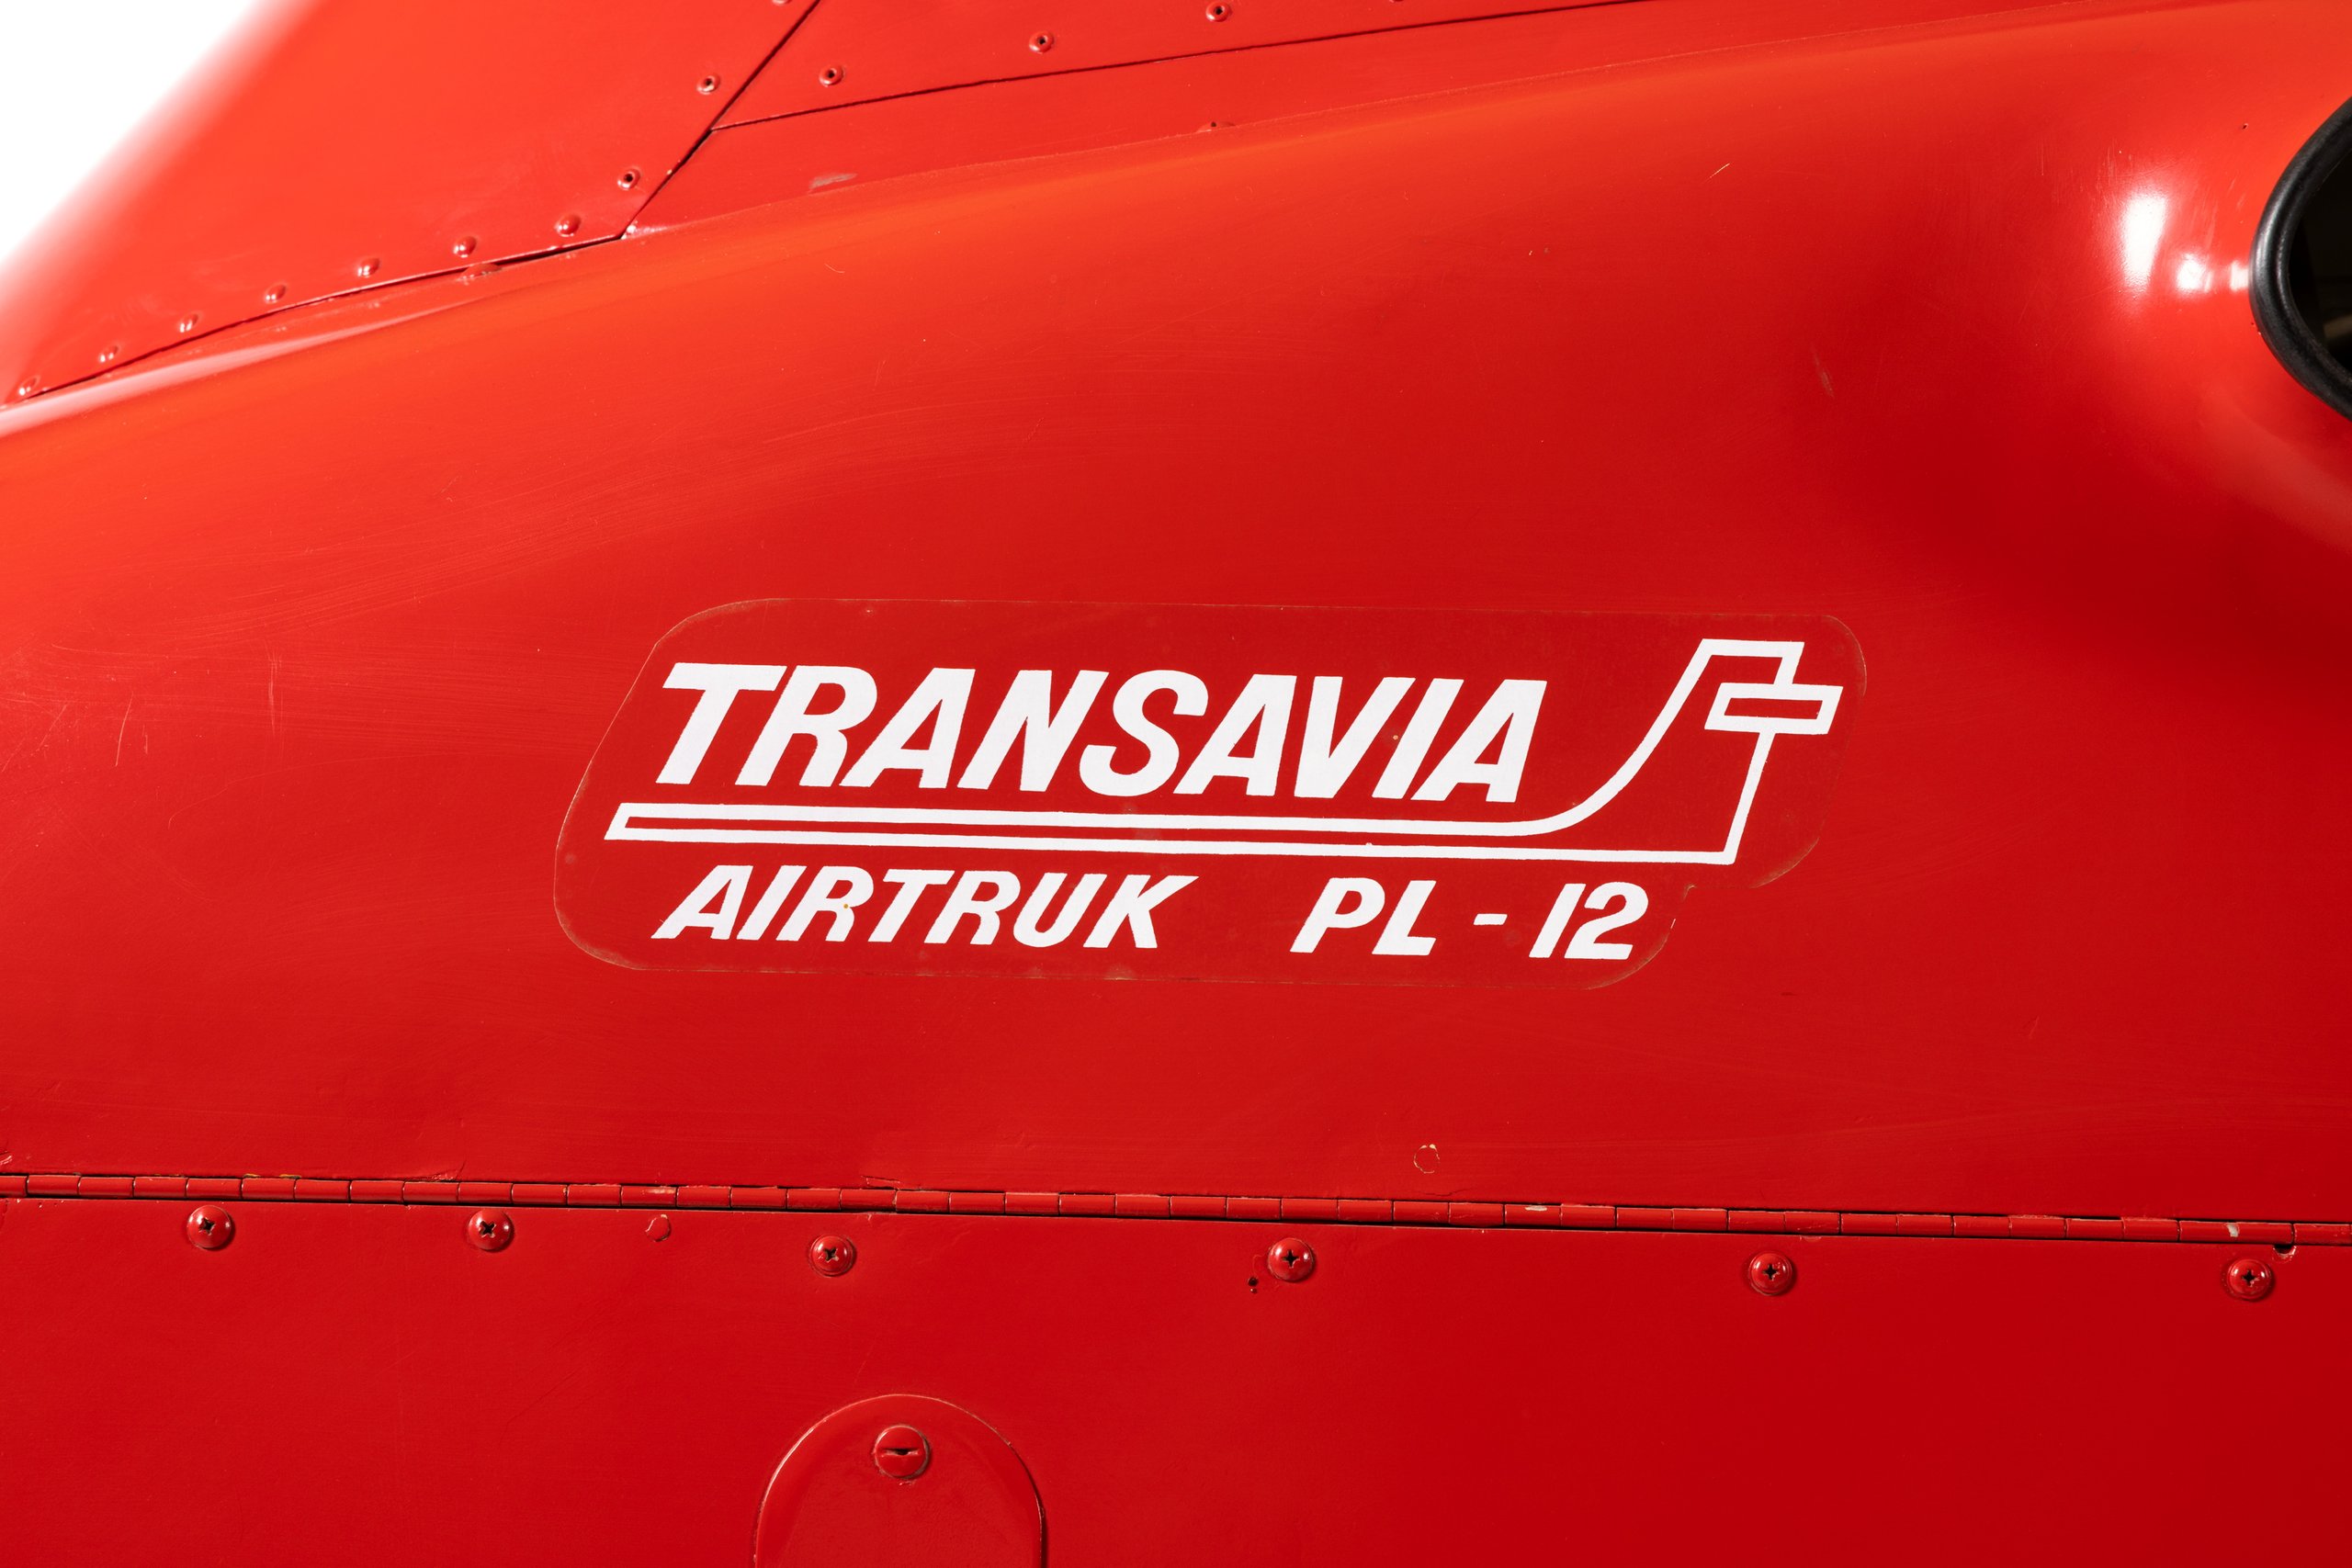 Transavia PL-12 Airtruk VH-TRN